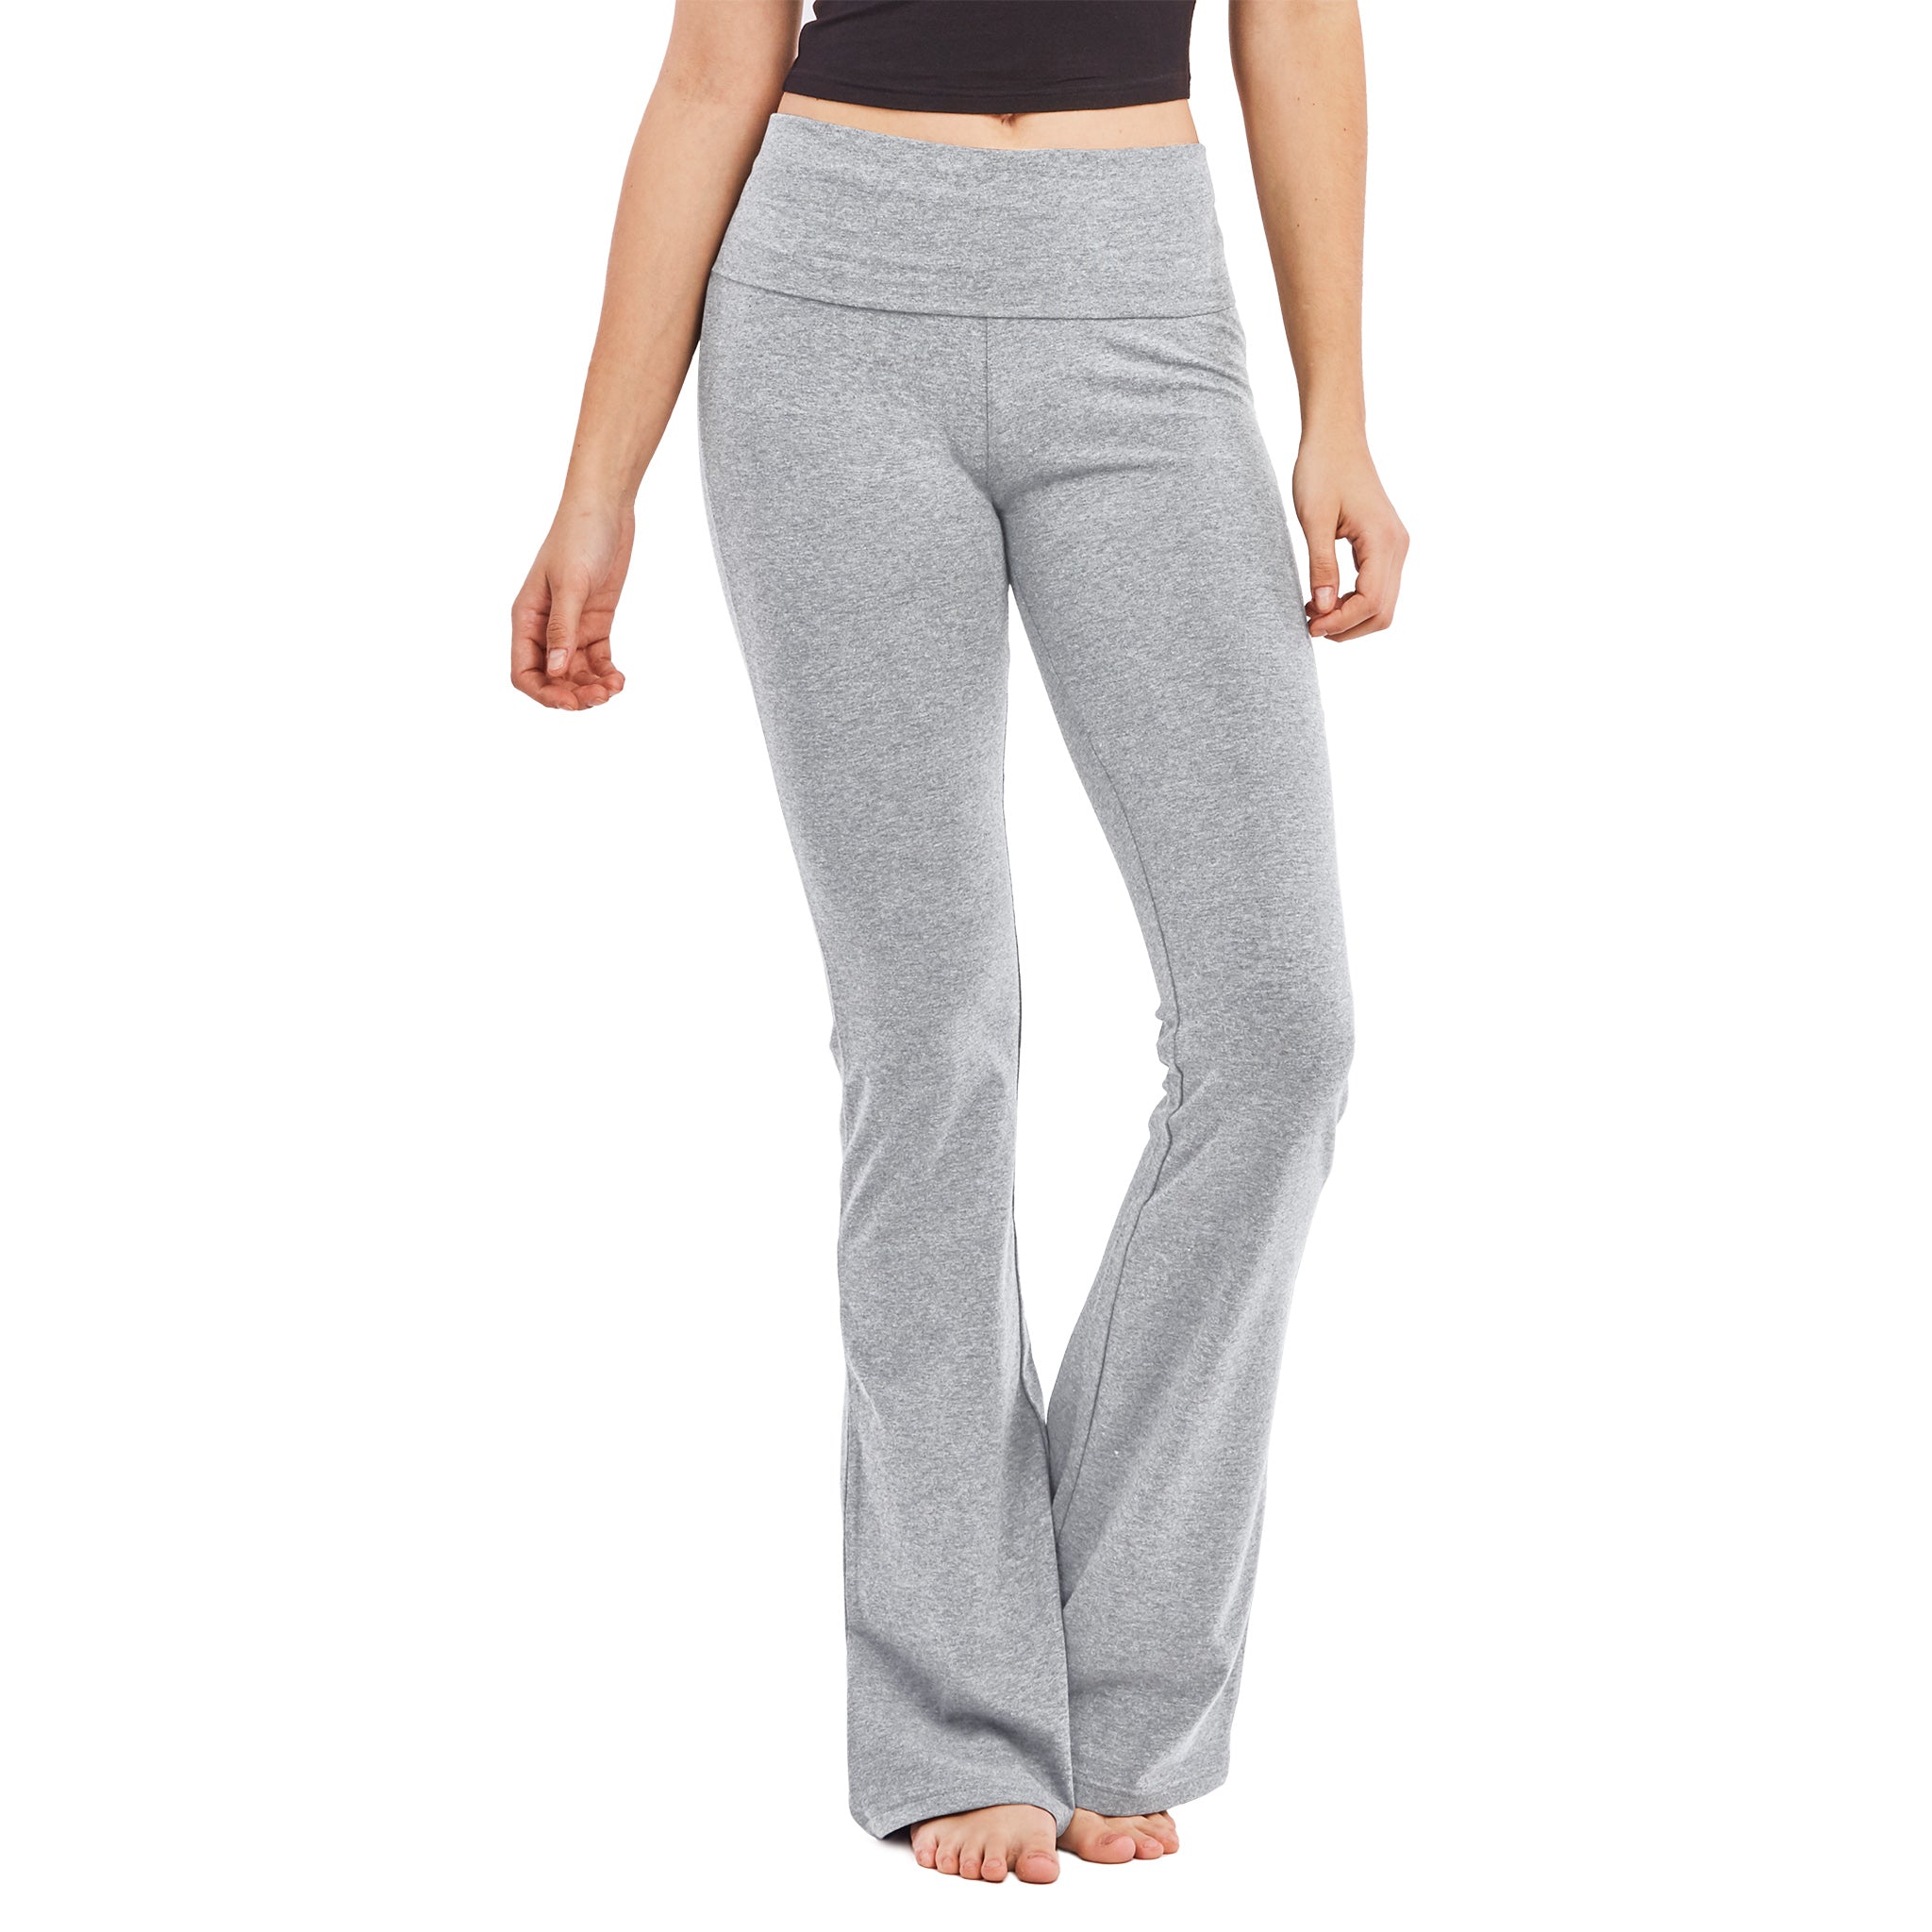 TheLovely Women's Fold-Over Waistband Bootleg Flared Bottom Workout Yoga Pants Leggings - image 1 of 3